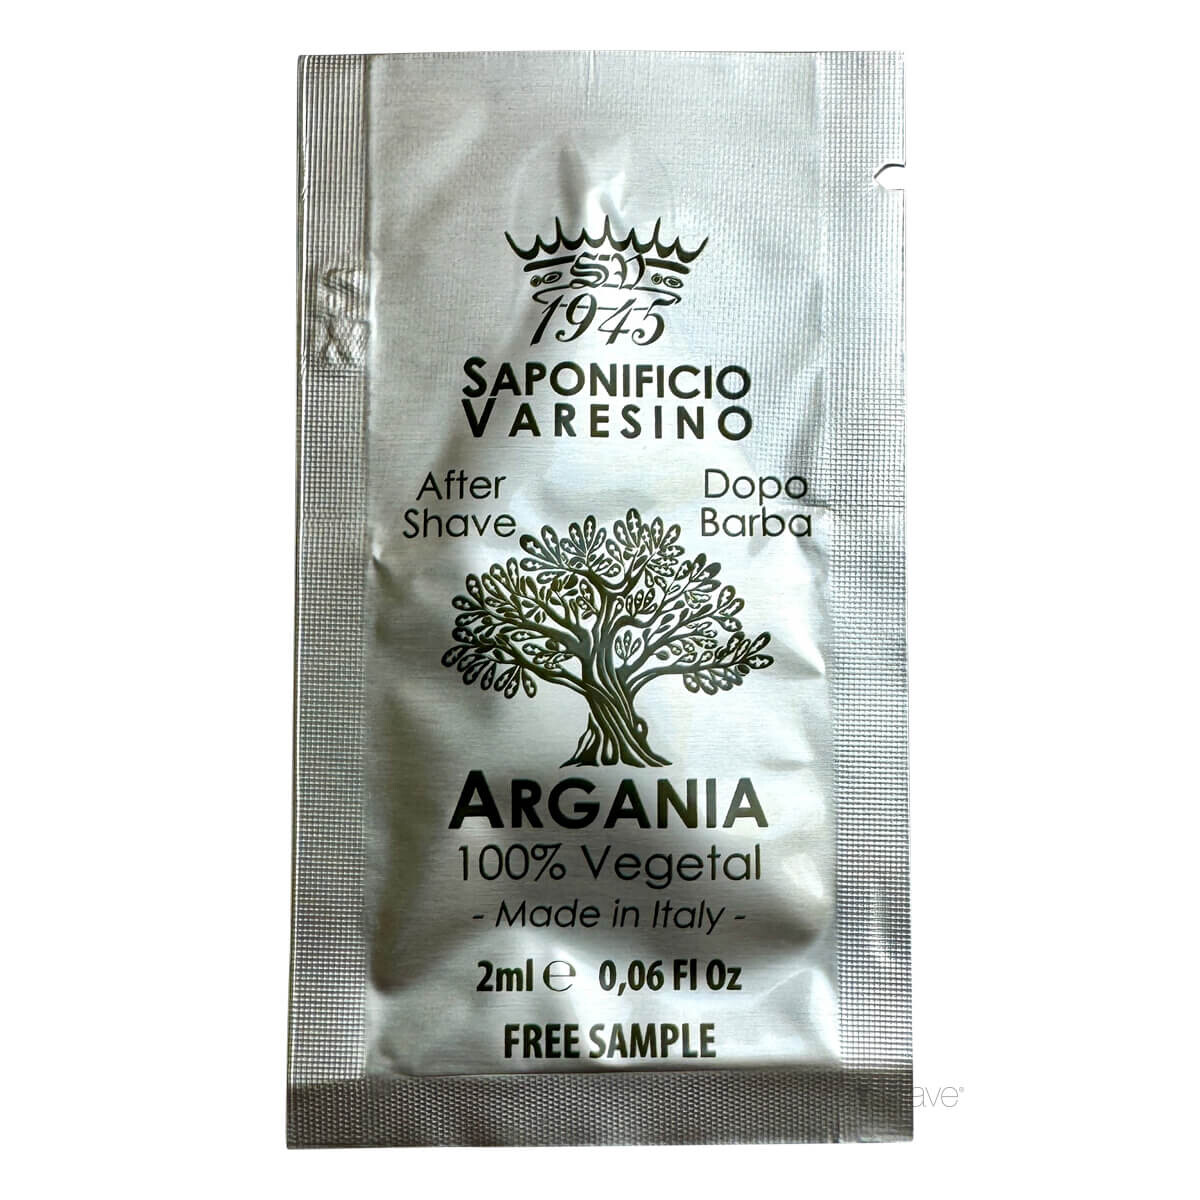 Saponificio Varesino Aftershave, Argania, SAMPLE, 2 ml.